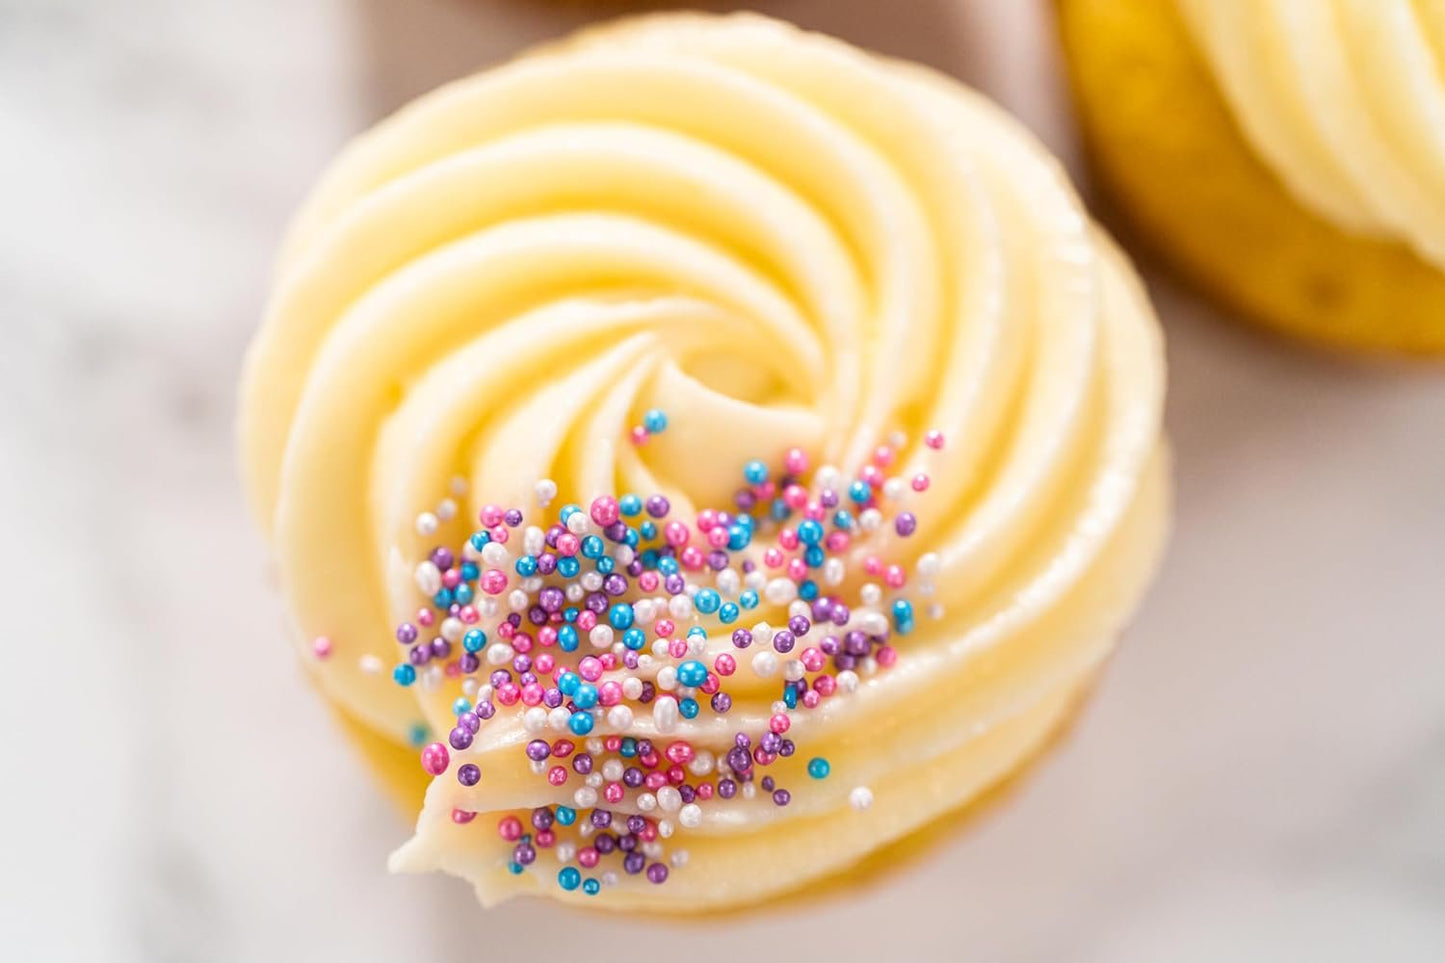 Bakerpan Edible Pastel Colors Nonpareils Sprinkles & Jimmies Sprinkles for Cupcakes, Pastel Sprinkles Edible for Cake Decorating